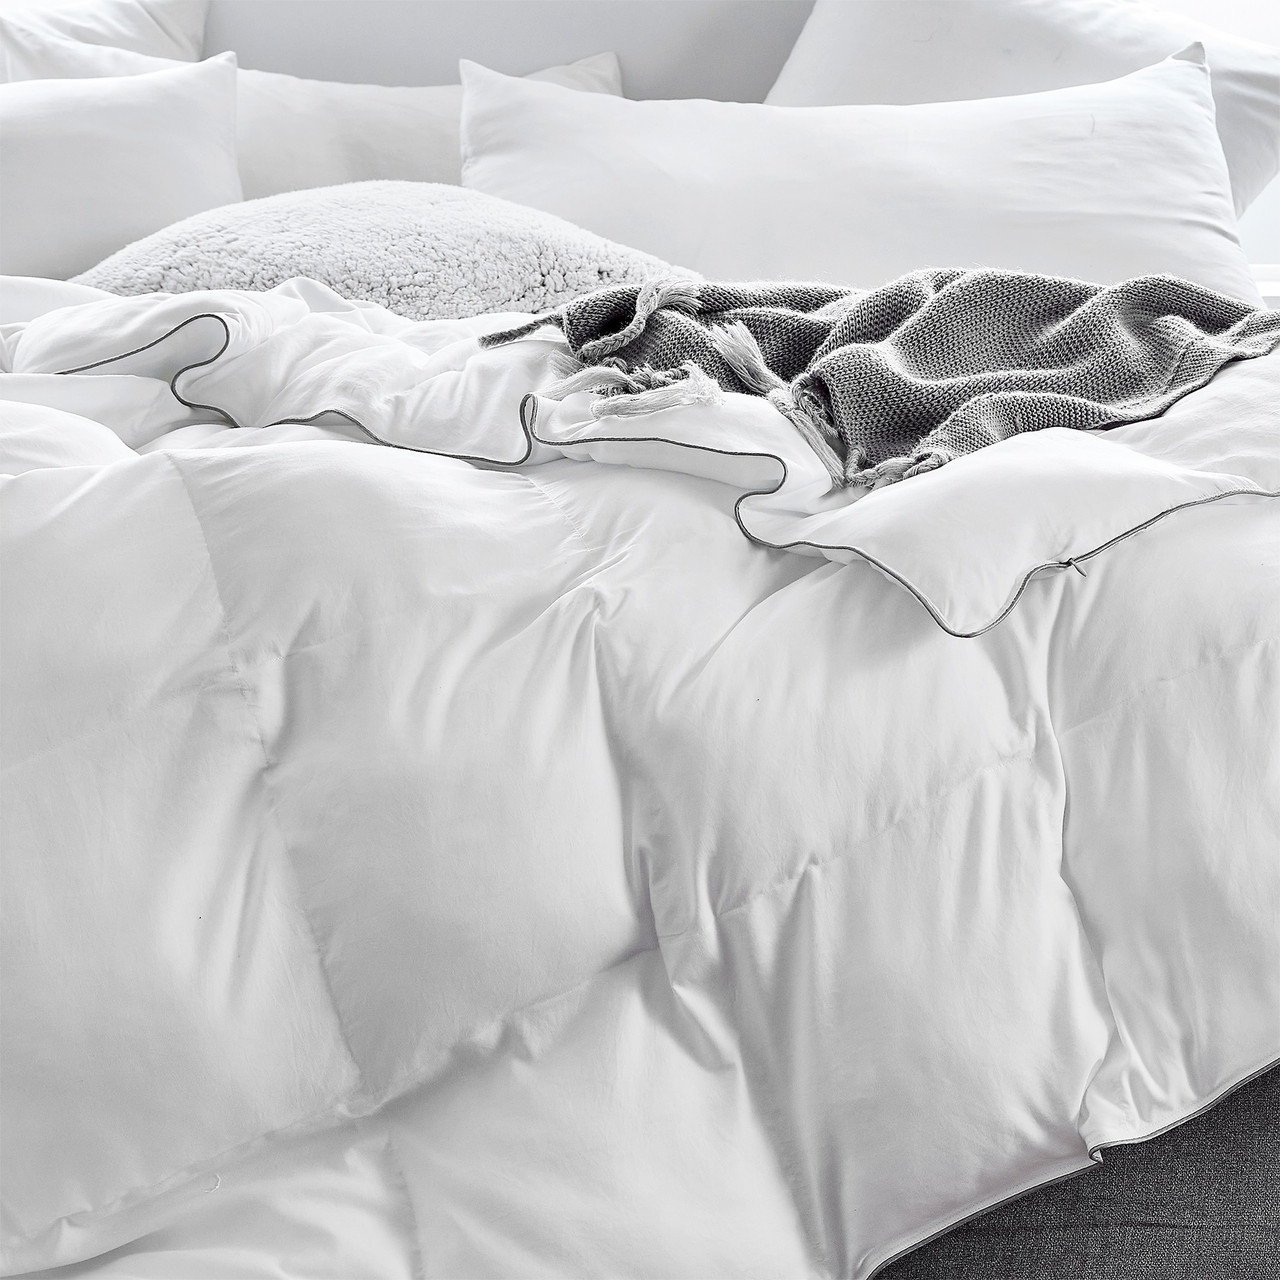 Snorze Cloud Comforter Set - Coma Inducer Oversized Bedding in True Blue - Oversized Alaskan King